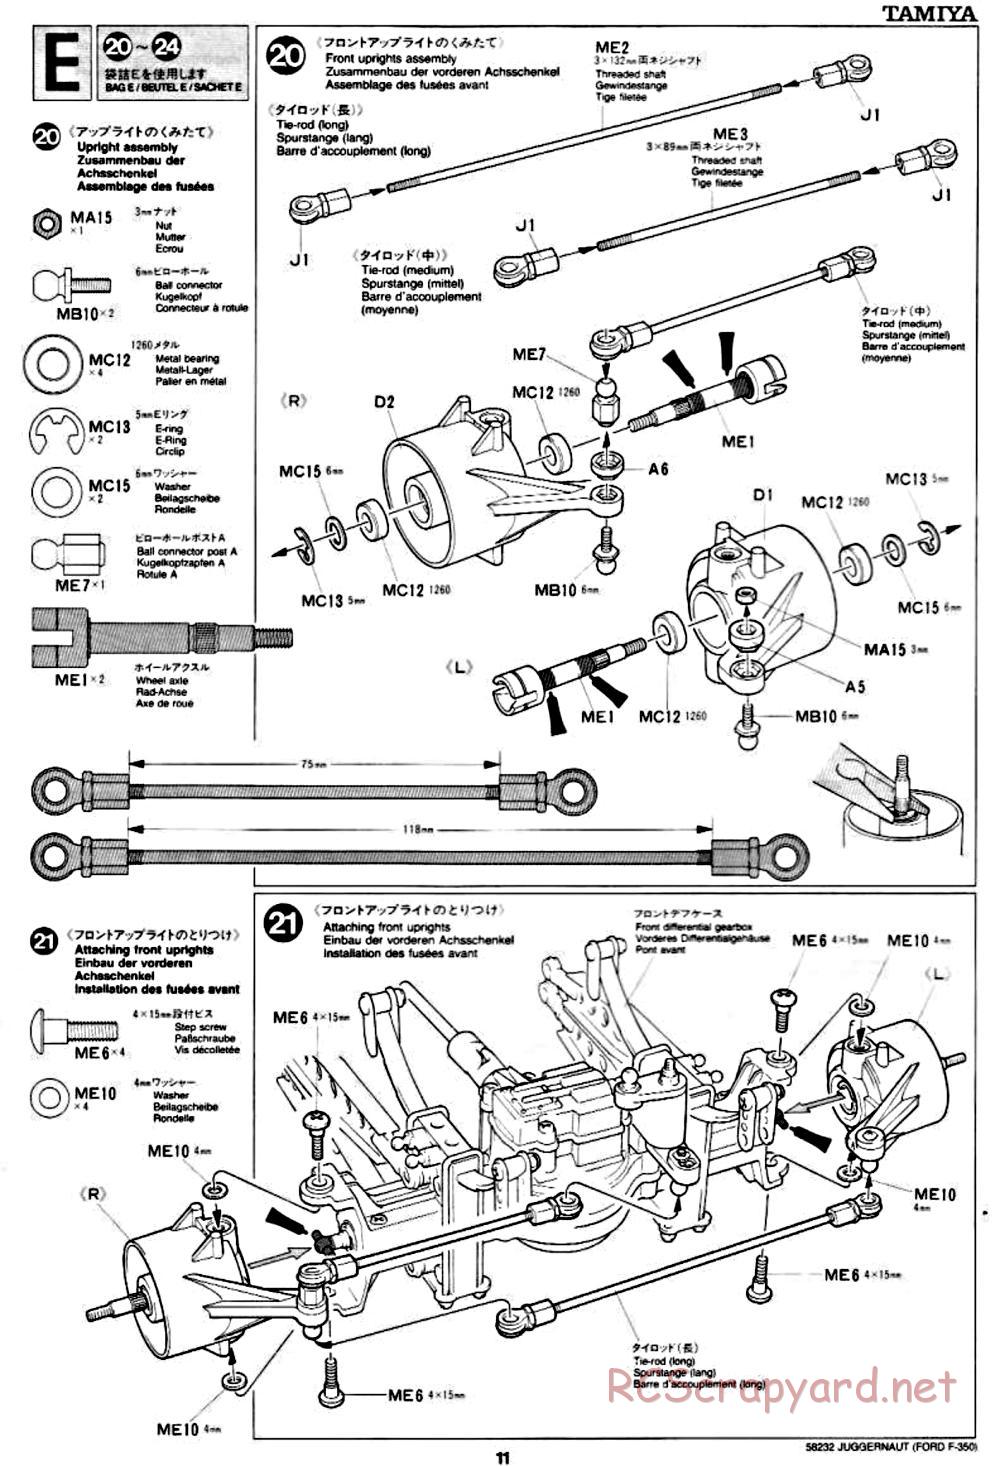 Tamiya - Juggernaut Chassis - Manual - Page 11